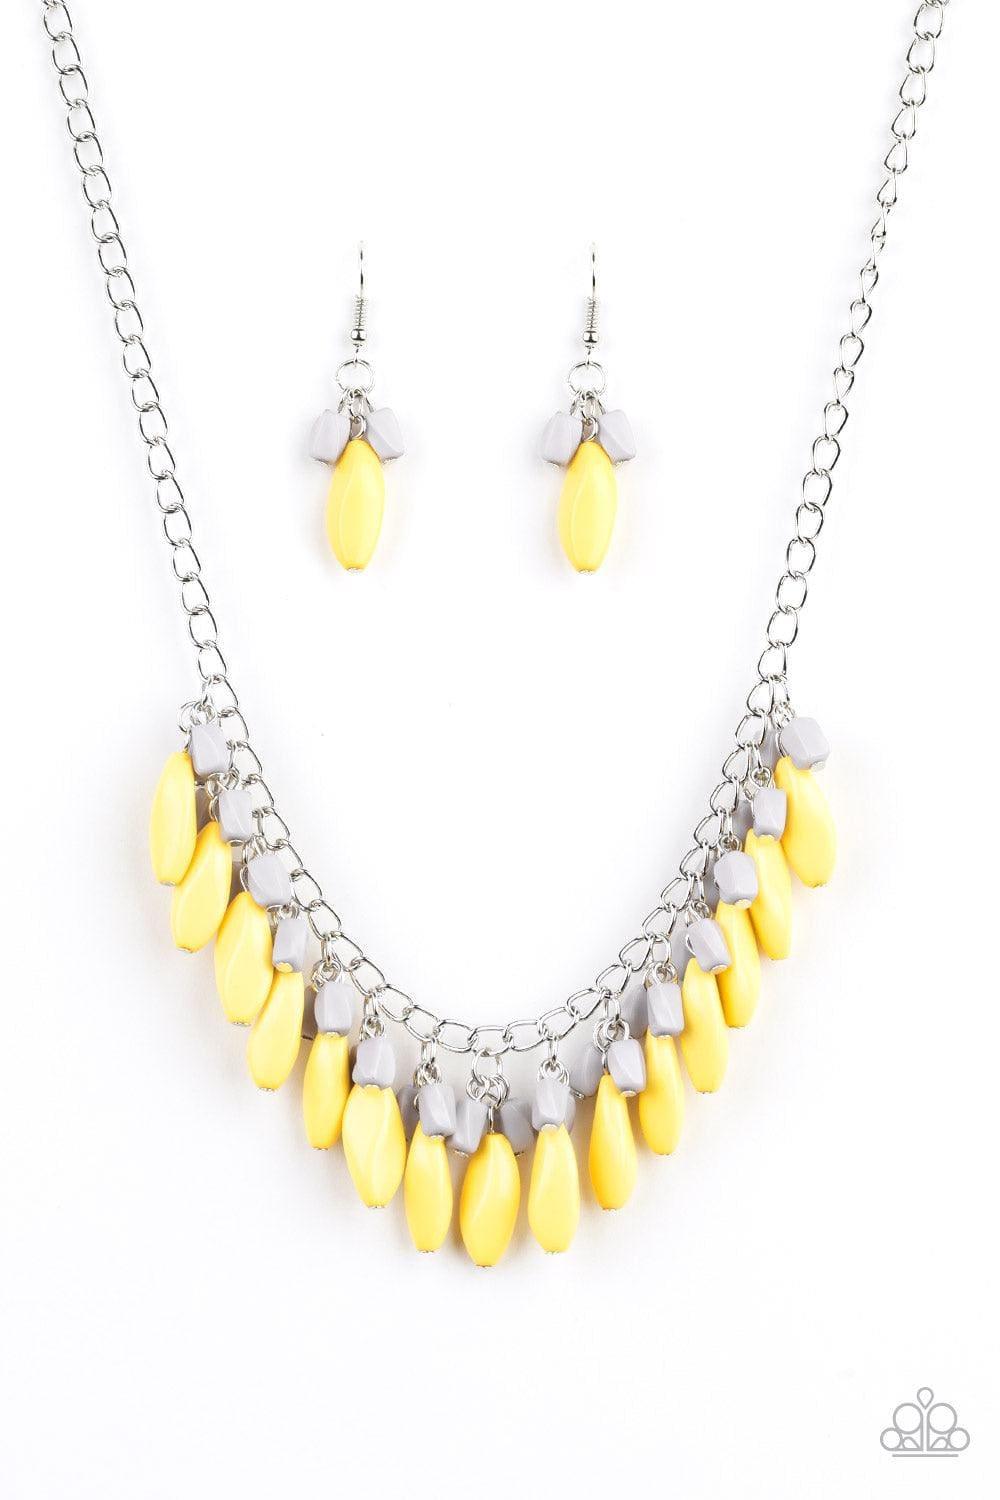 Paparazzi Accessories - Bead Binge - Yellow Necklace - Bling by JessieK